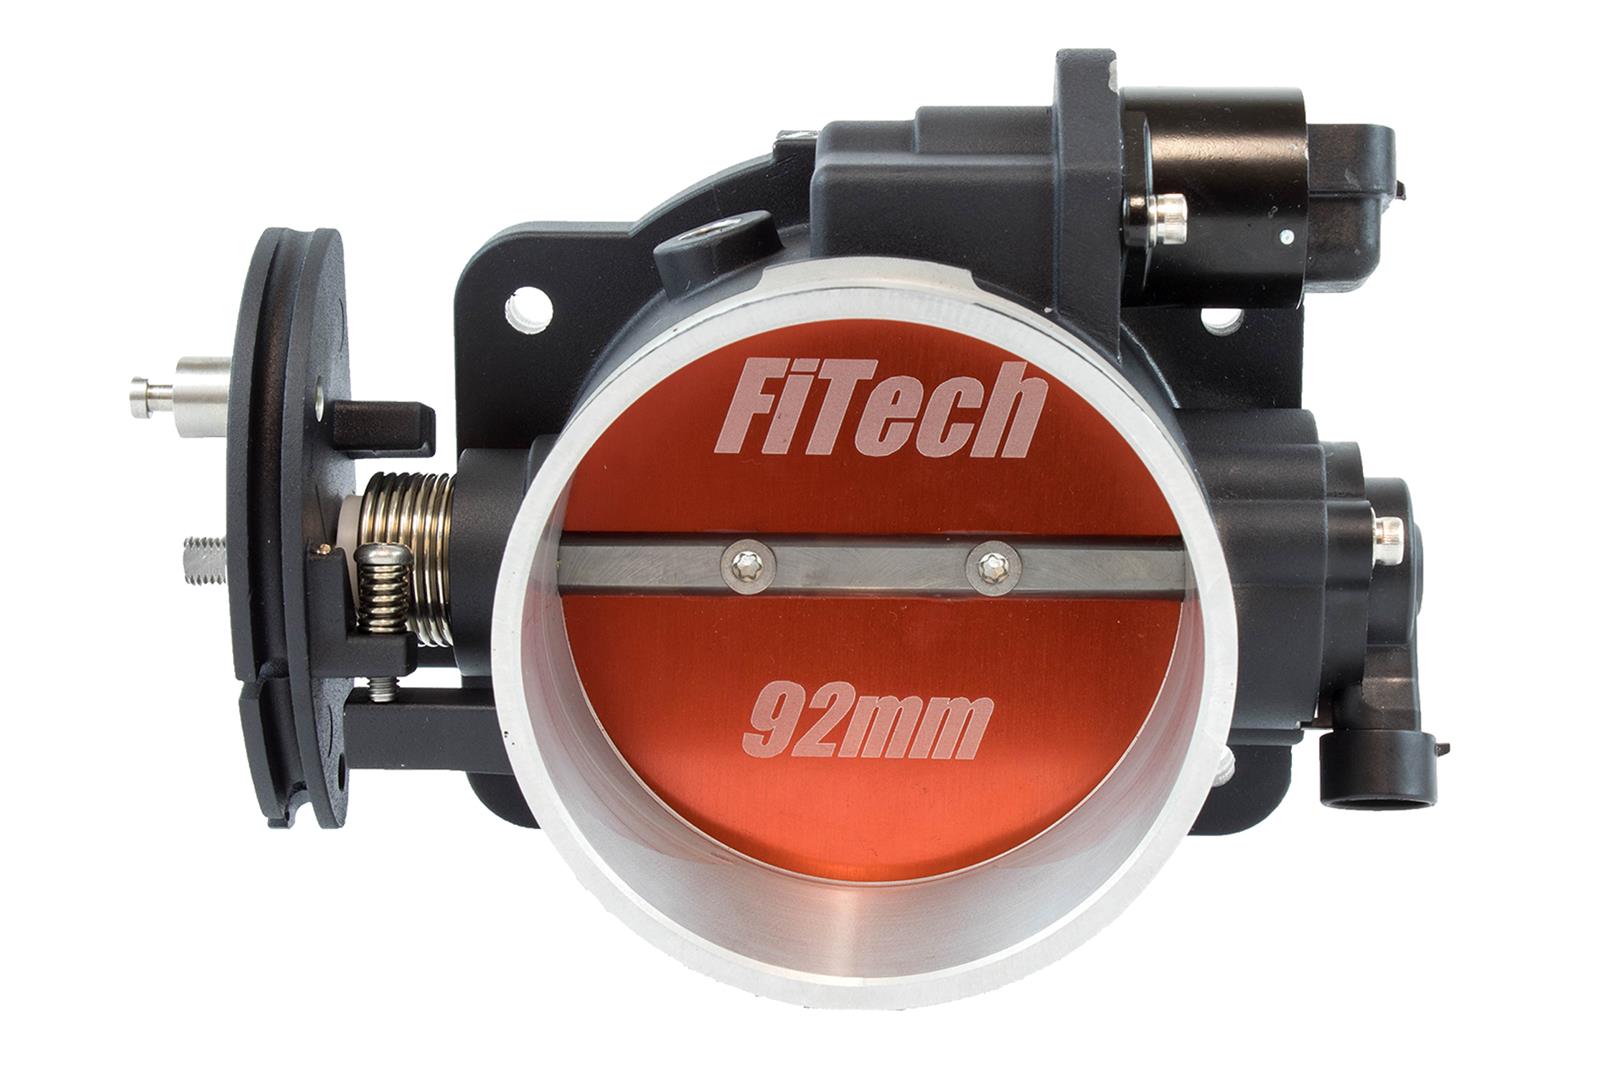 EFI-70061 Fitech Throttle Bodies | Danny's Rod Shop - Street Rod 